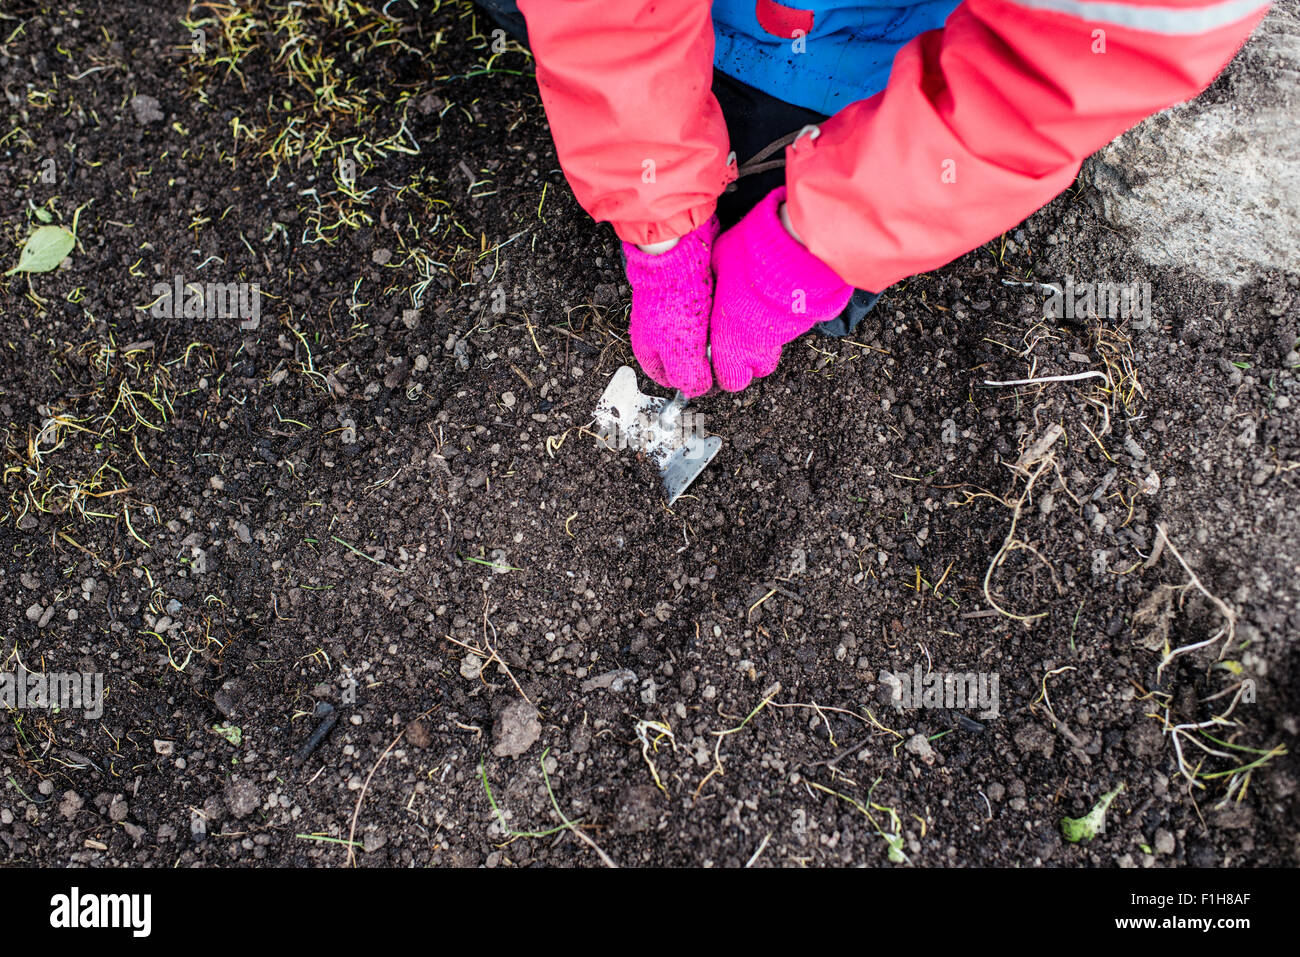 Lifestyle spring scene. Little girl digging in the garden soil preparing for flowers, plants and vegetables. Stock Photo